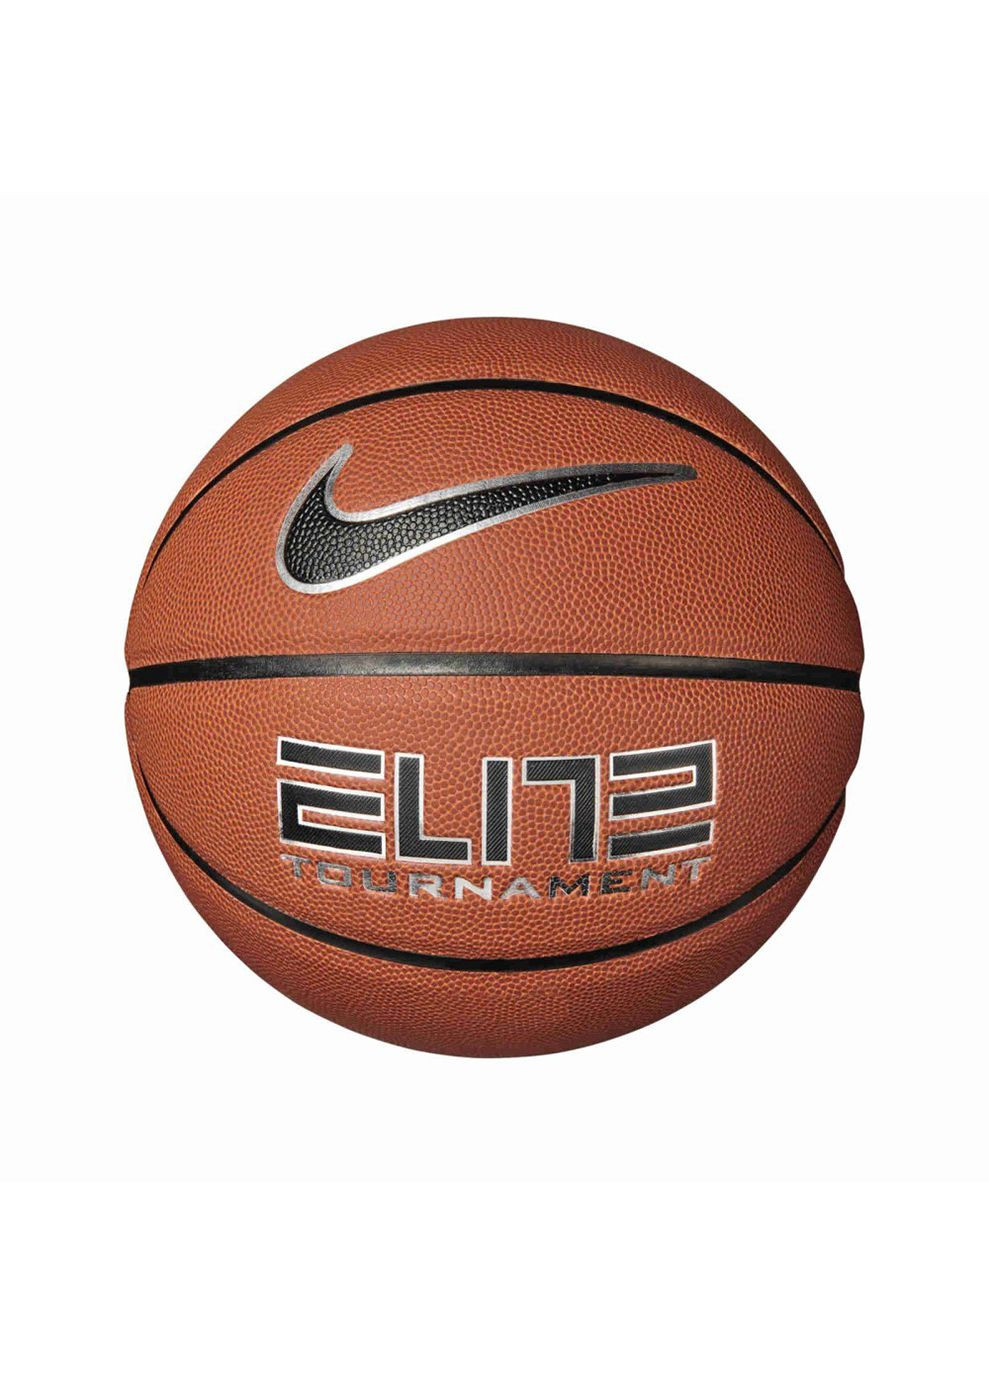 Баскетбольный Мяч ELITE TOURNAMENT 8P DEFLATED оранжевый Уни 7 Nike (268747100)